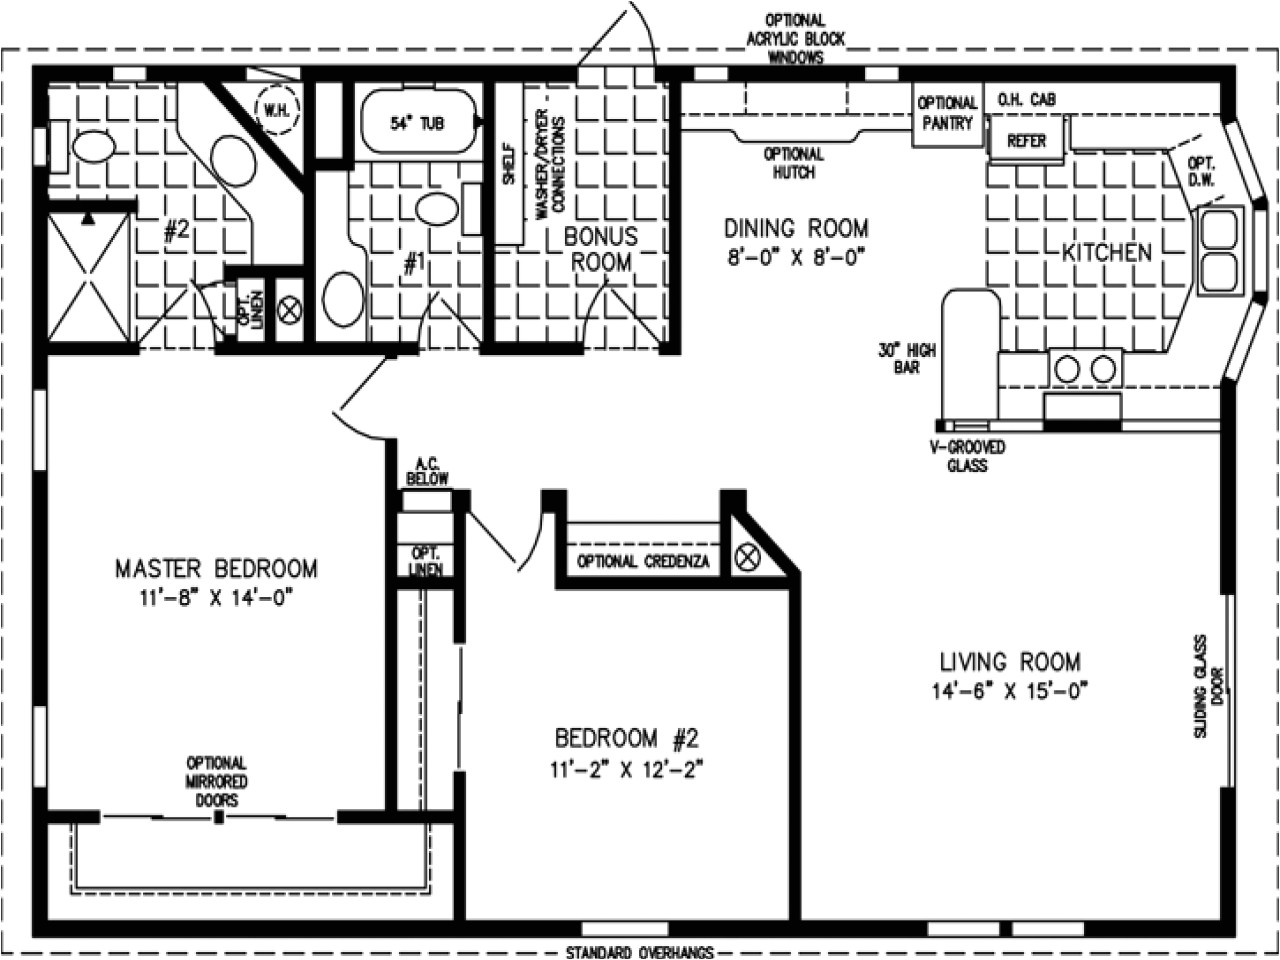 2 bedroom floor plans for 700 sq ft house